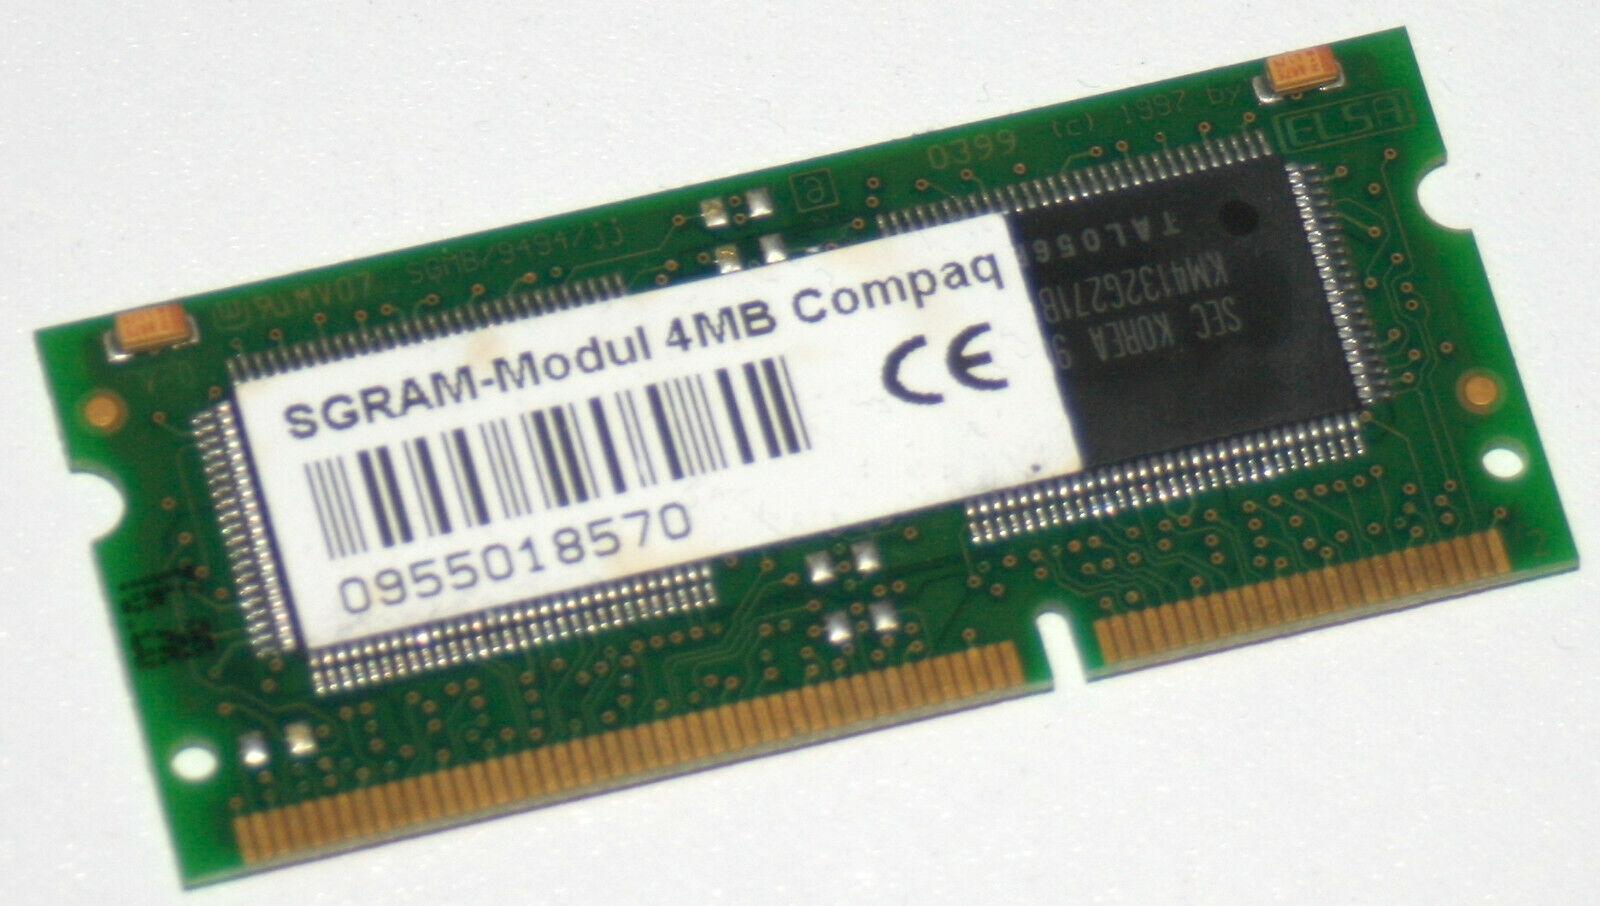 Compaq SGRAM Modul 4MB, Video Memory  für PCI / AGP Grafikkarten